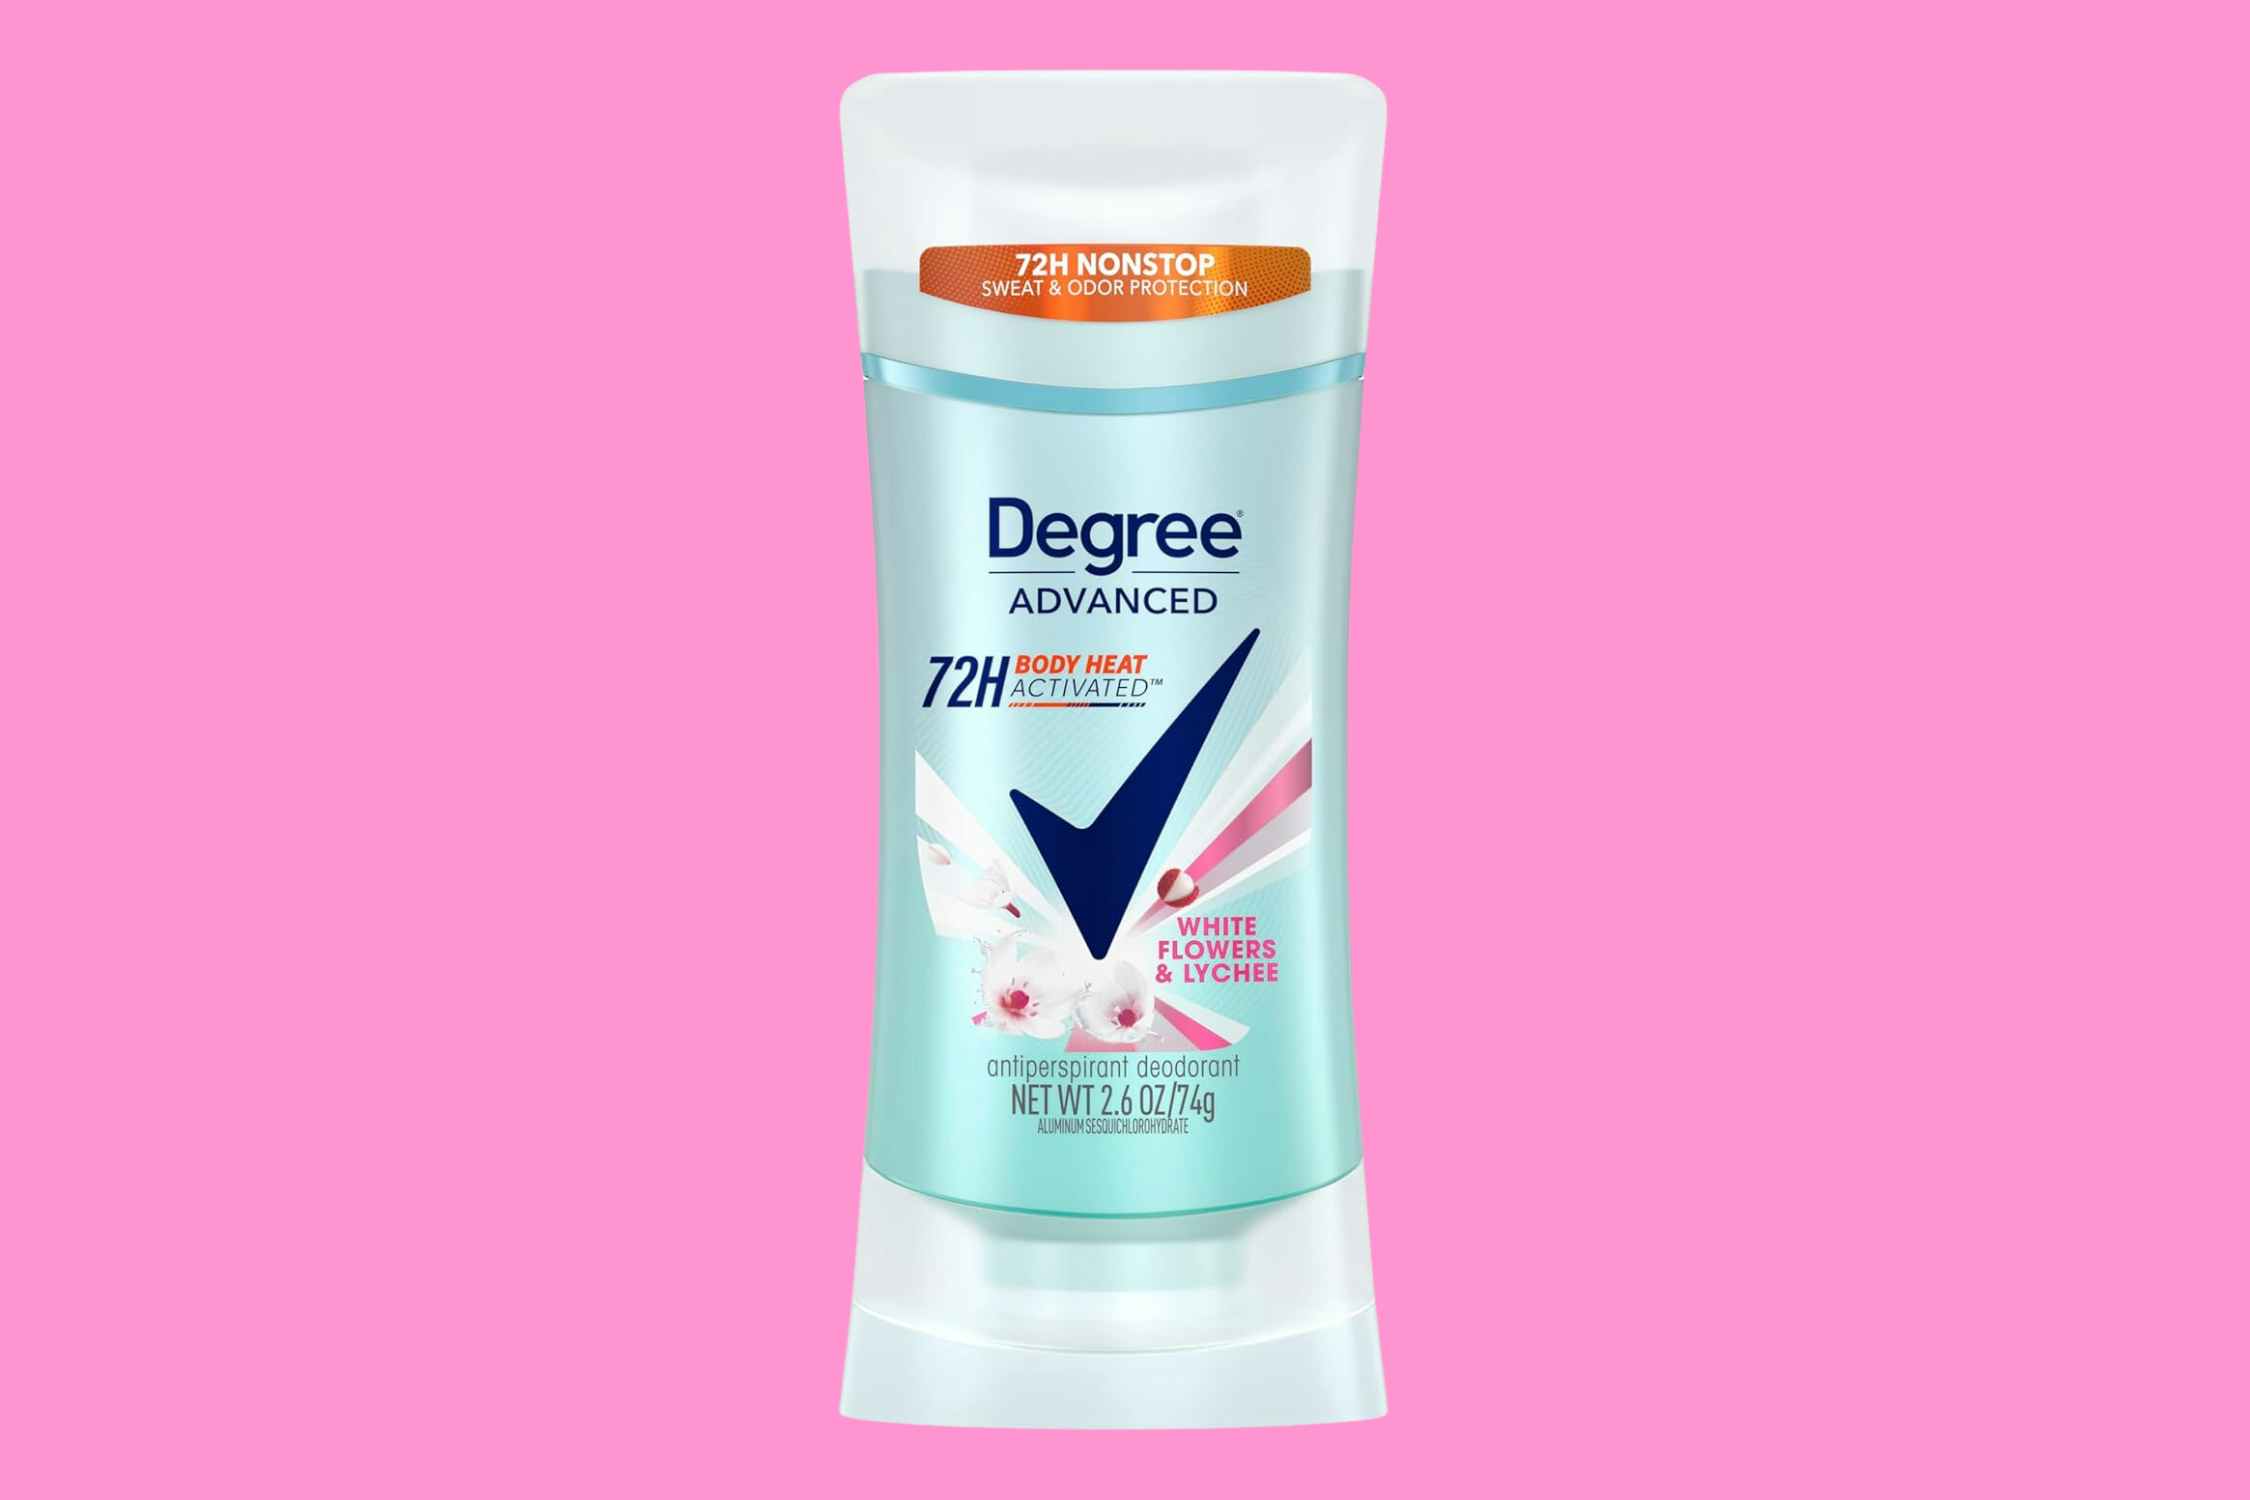 Degree Deodorant, as Low as $2.24 on Amazon (Reg. $5.29)